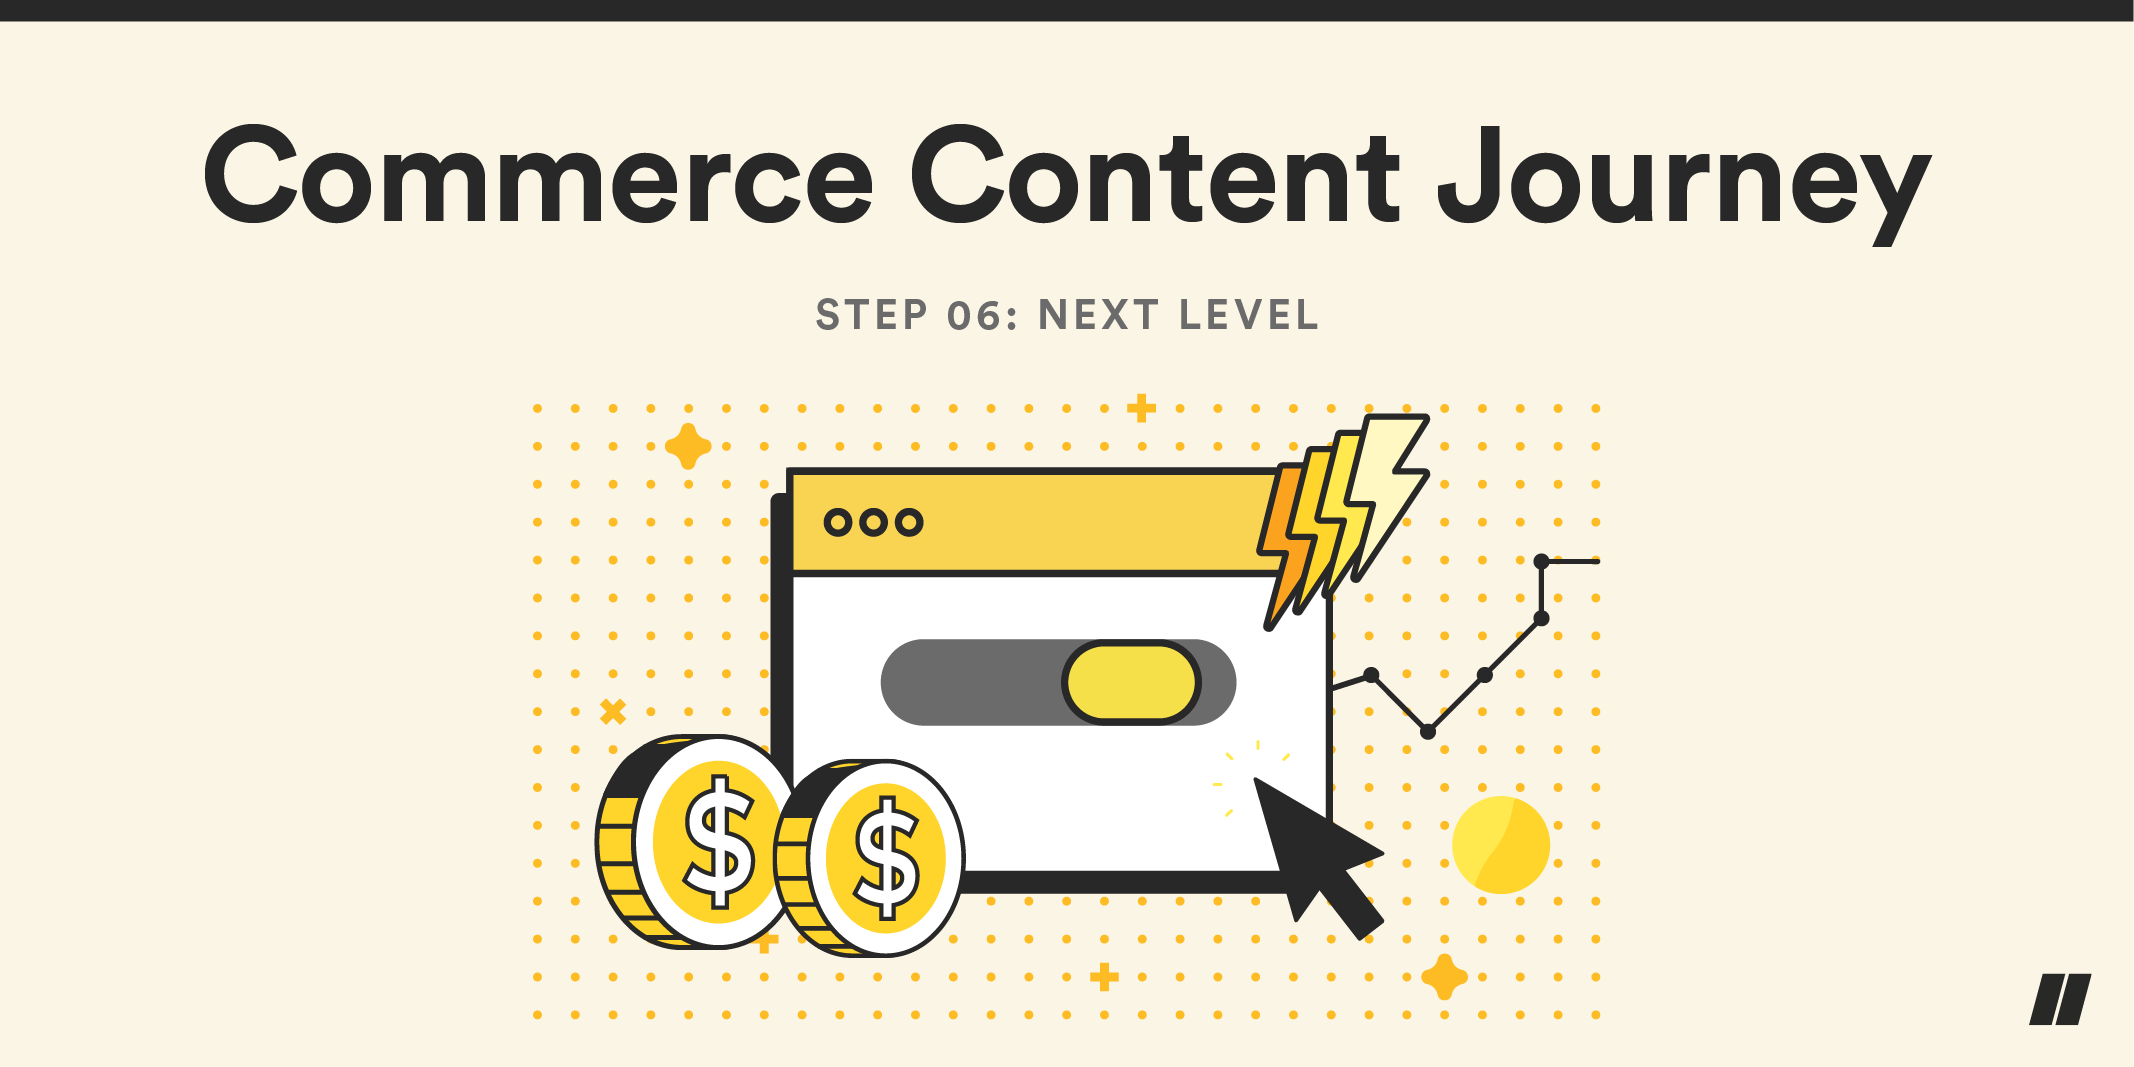 Commerce Content Journey: Next Level